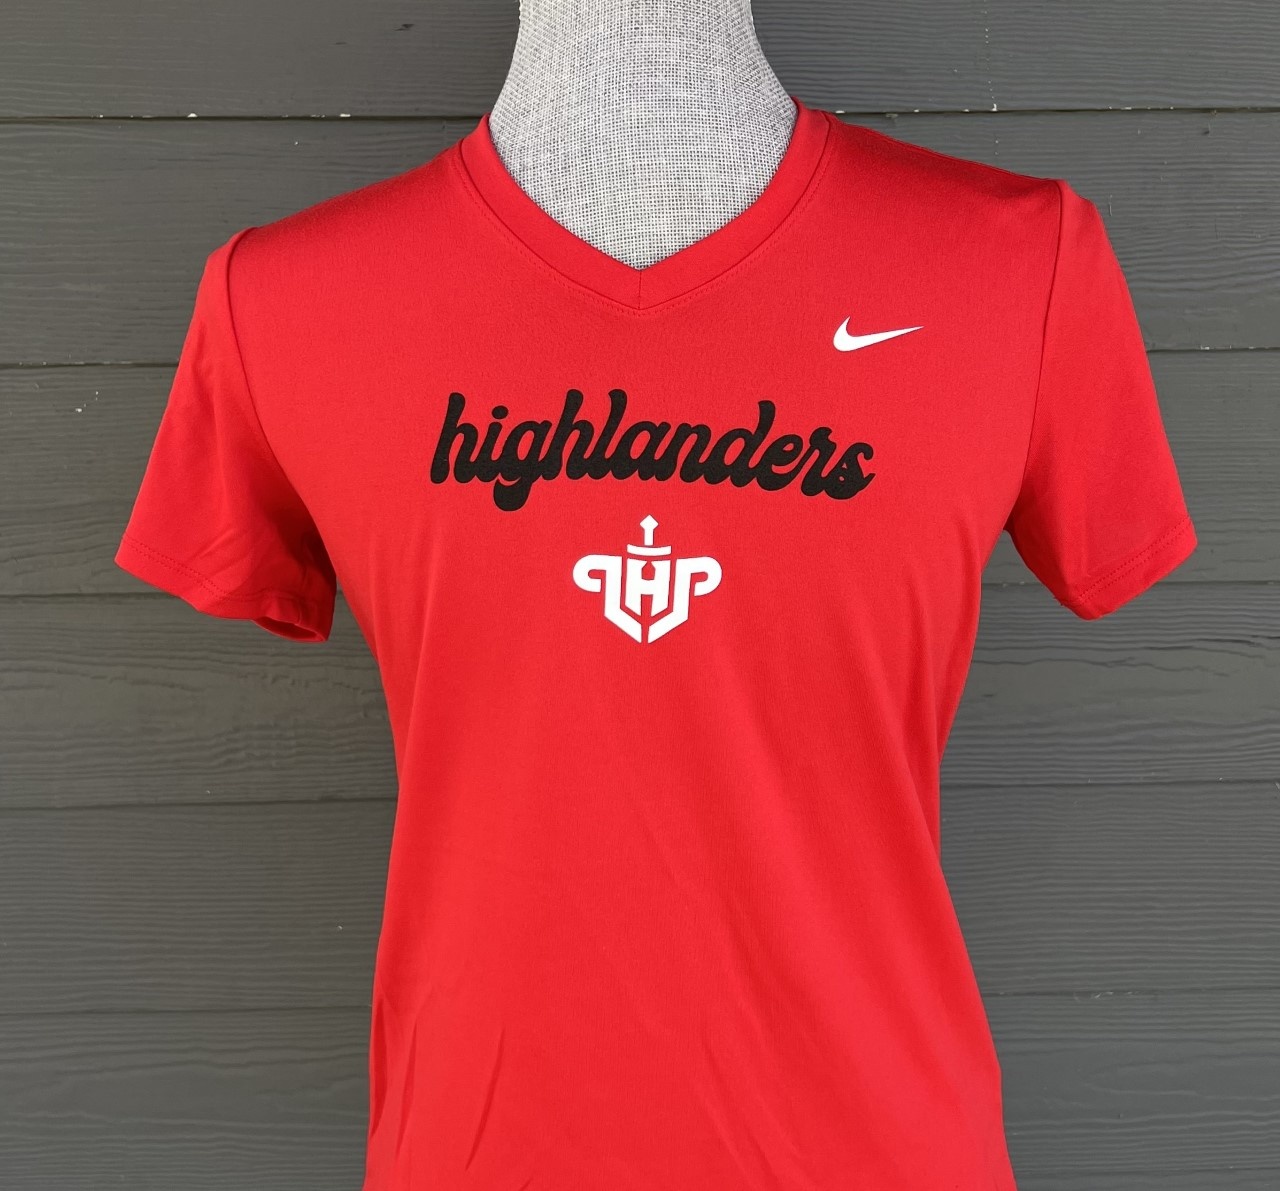 Nike Youth V Neck SS Tee Highlanders over LHP Logo 22